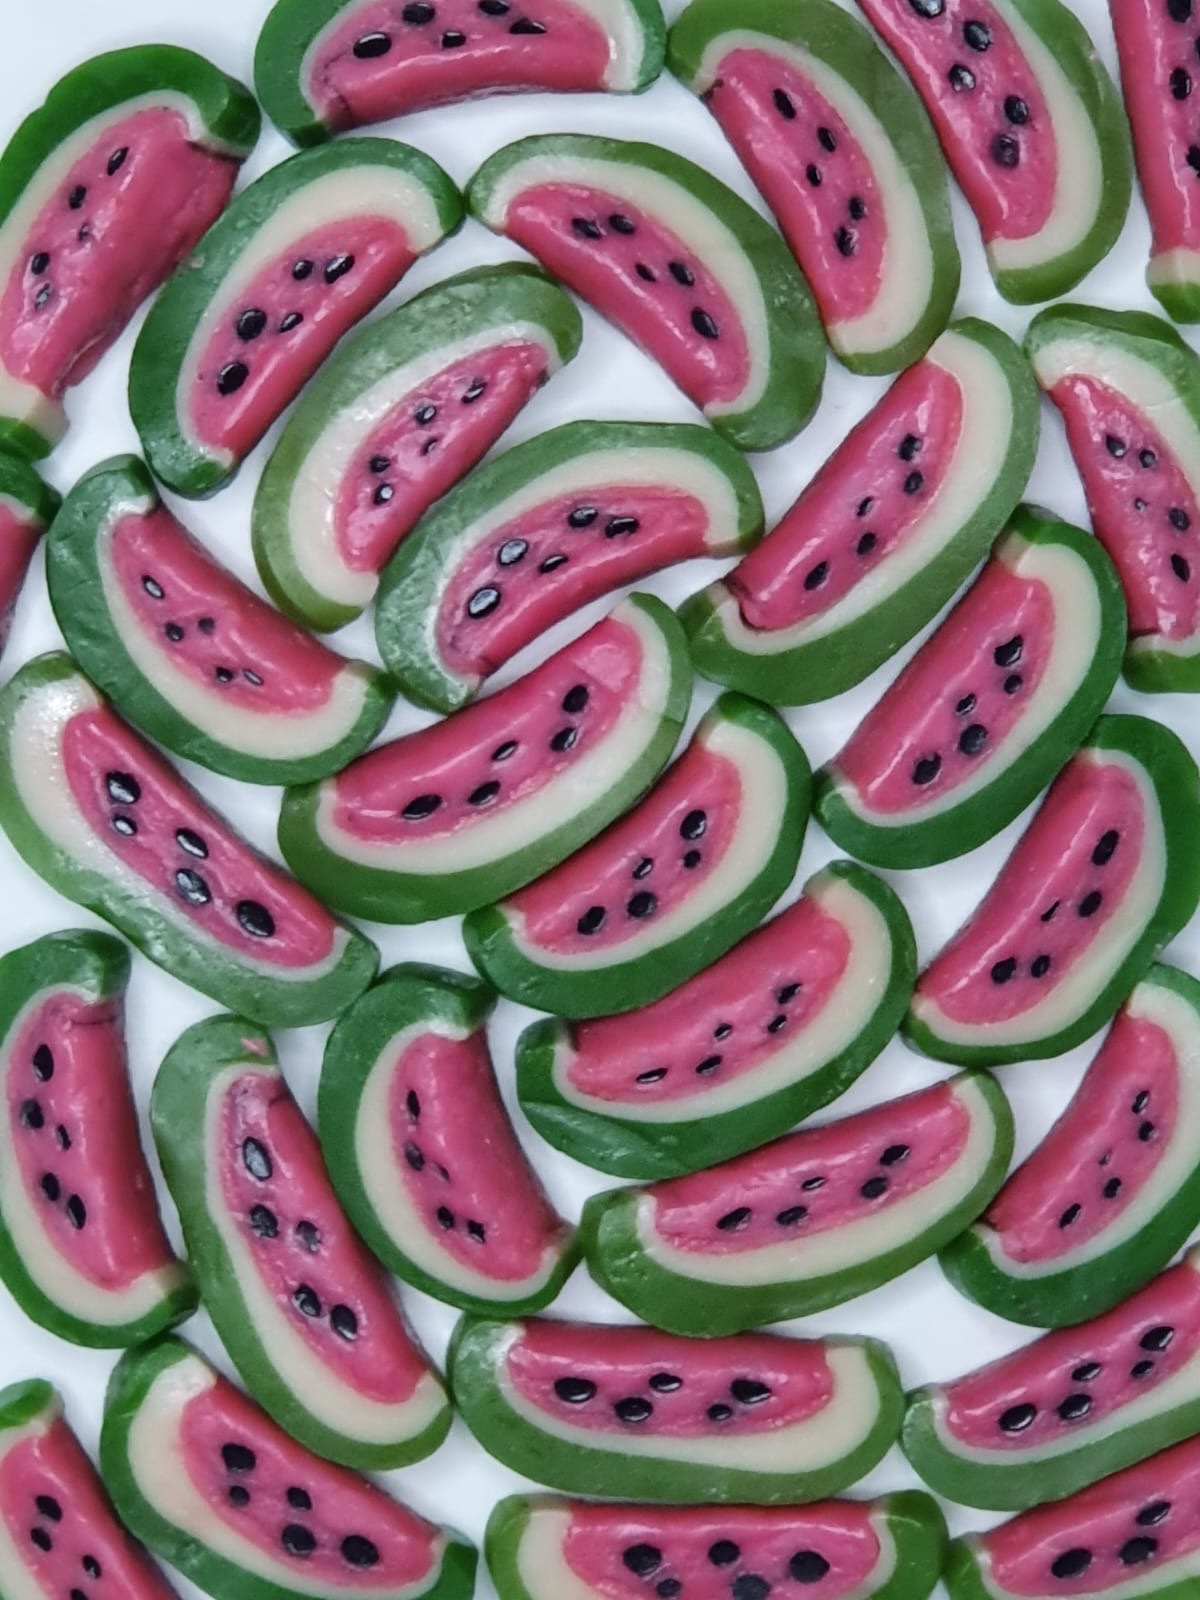 New Watermelon Slices